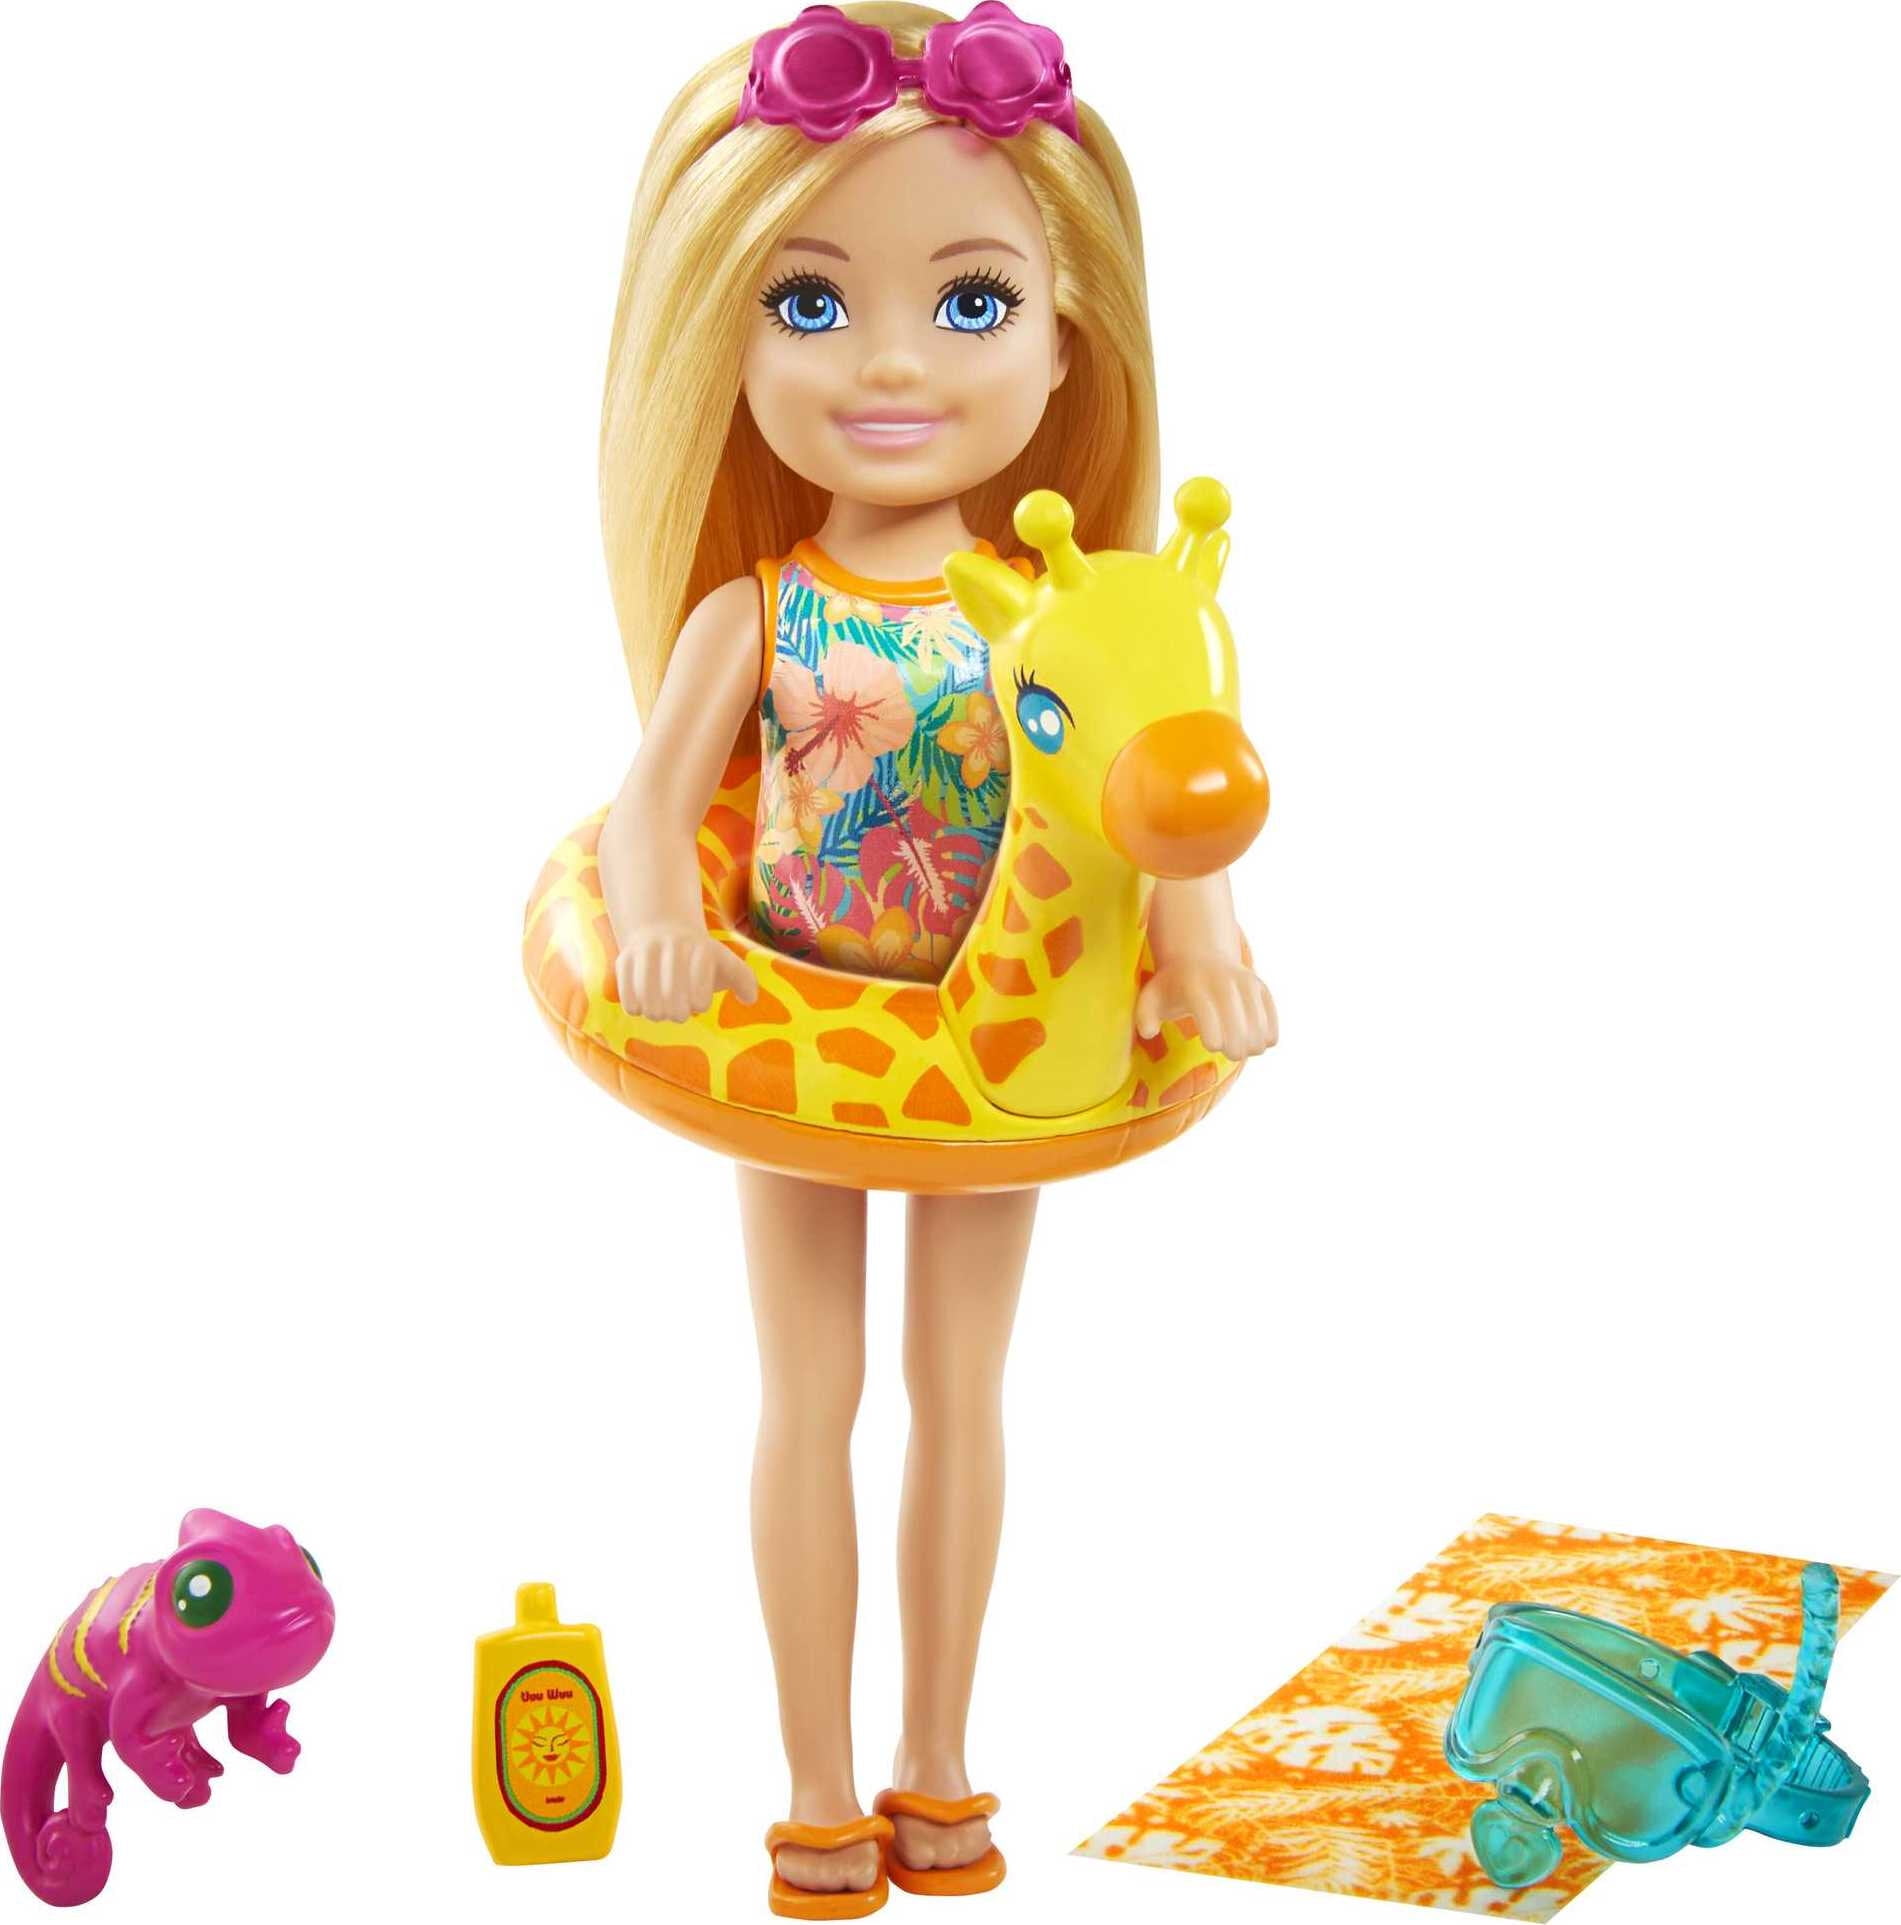 Accessories Mattel Barbie Chelsea doll Space Adventure 